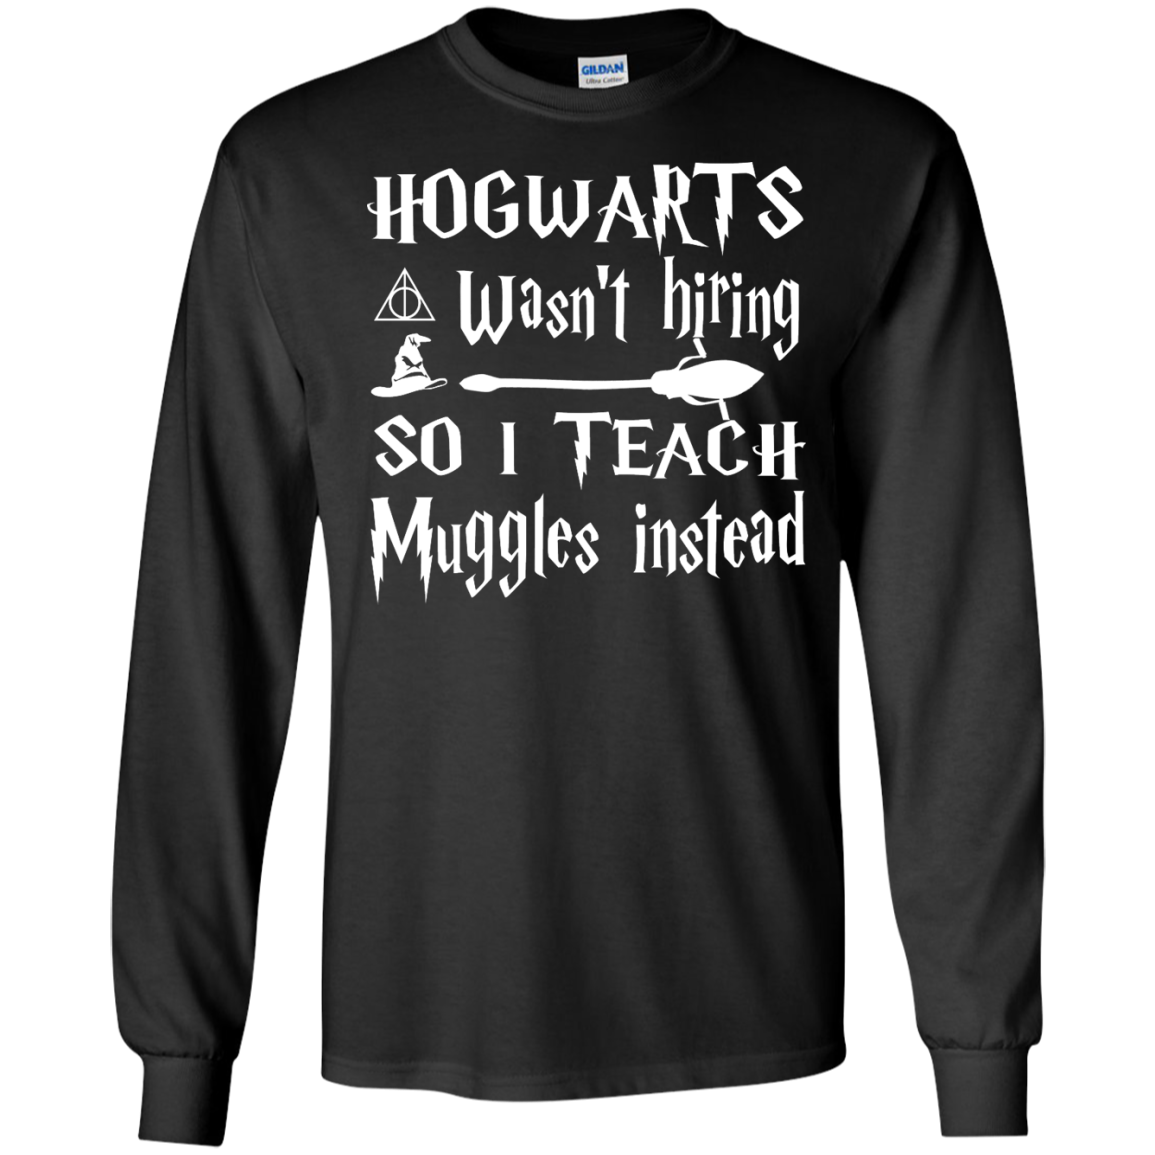 Hogwarts Wasn't Hiring So I Teach Muggles Instead shirt, sweater